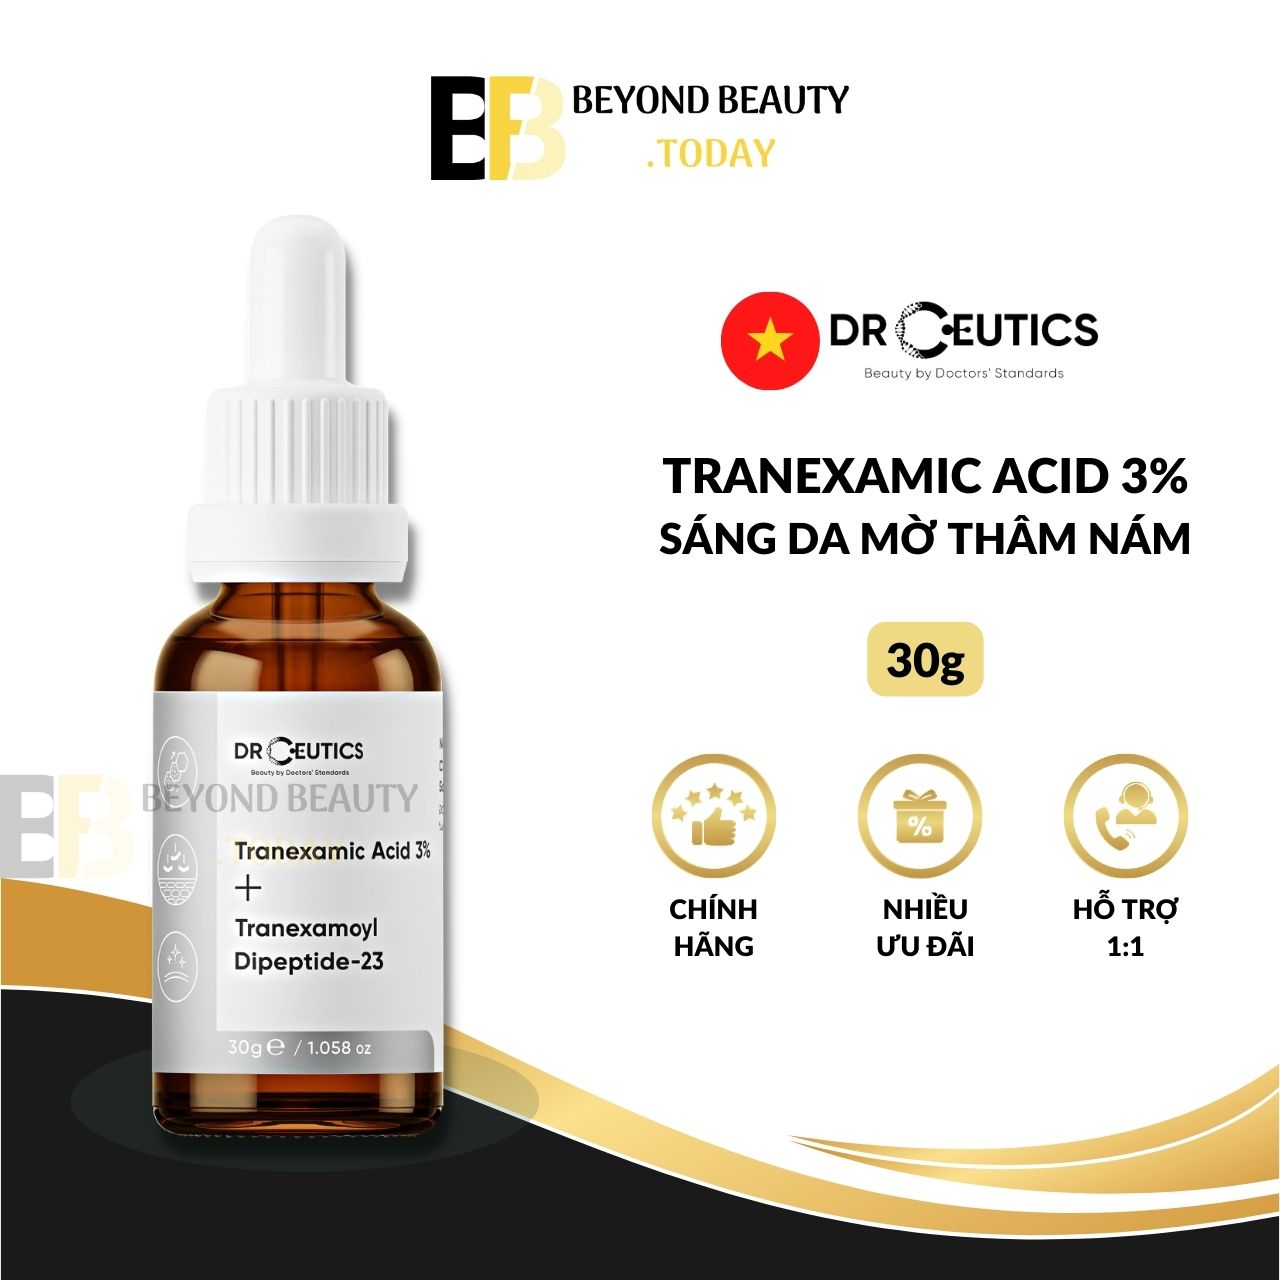 Serum Tranexamic Acid 3% + Tranexamoyl Dipeptide-23 DrCeutics - Sáng Da